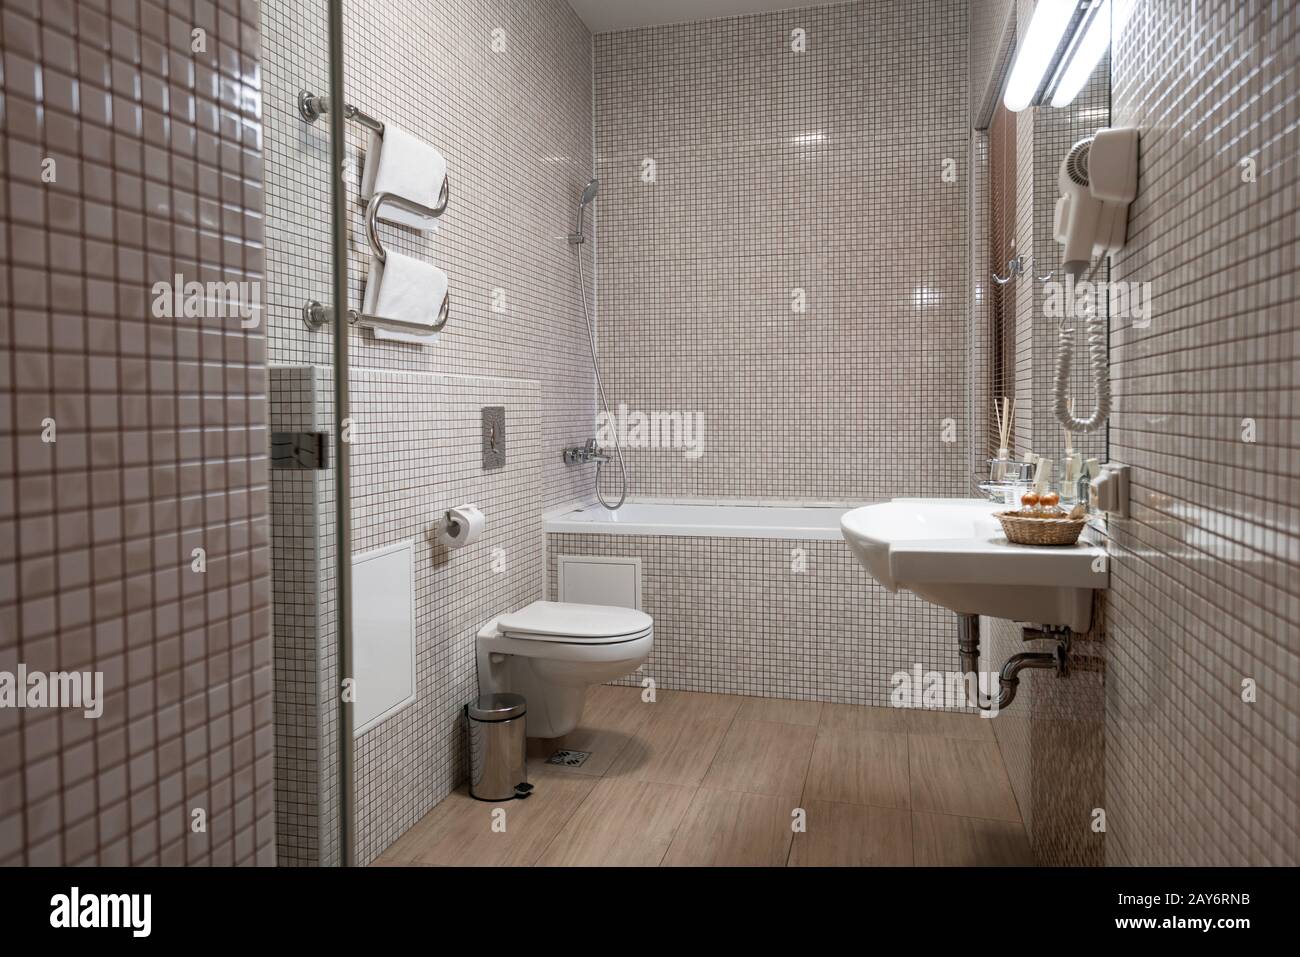 Fine hotel bathroom interior in beige and white Stock Photo